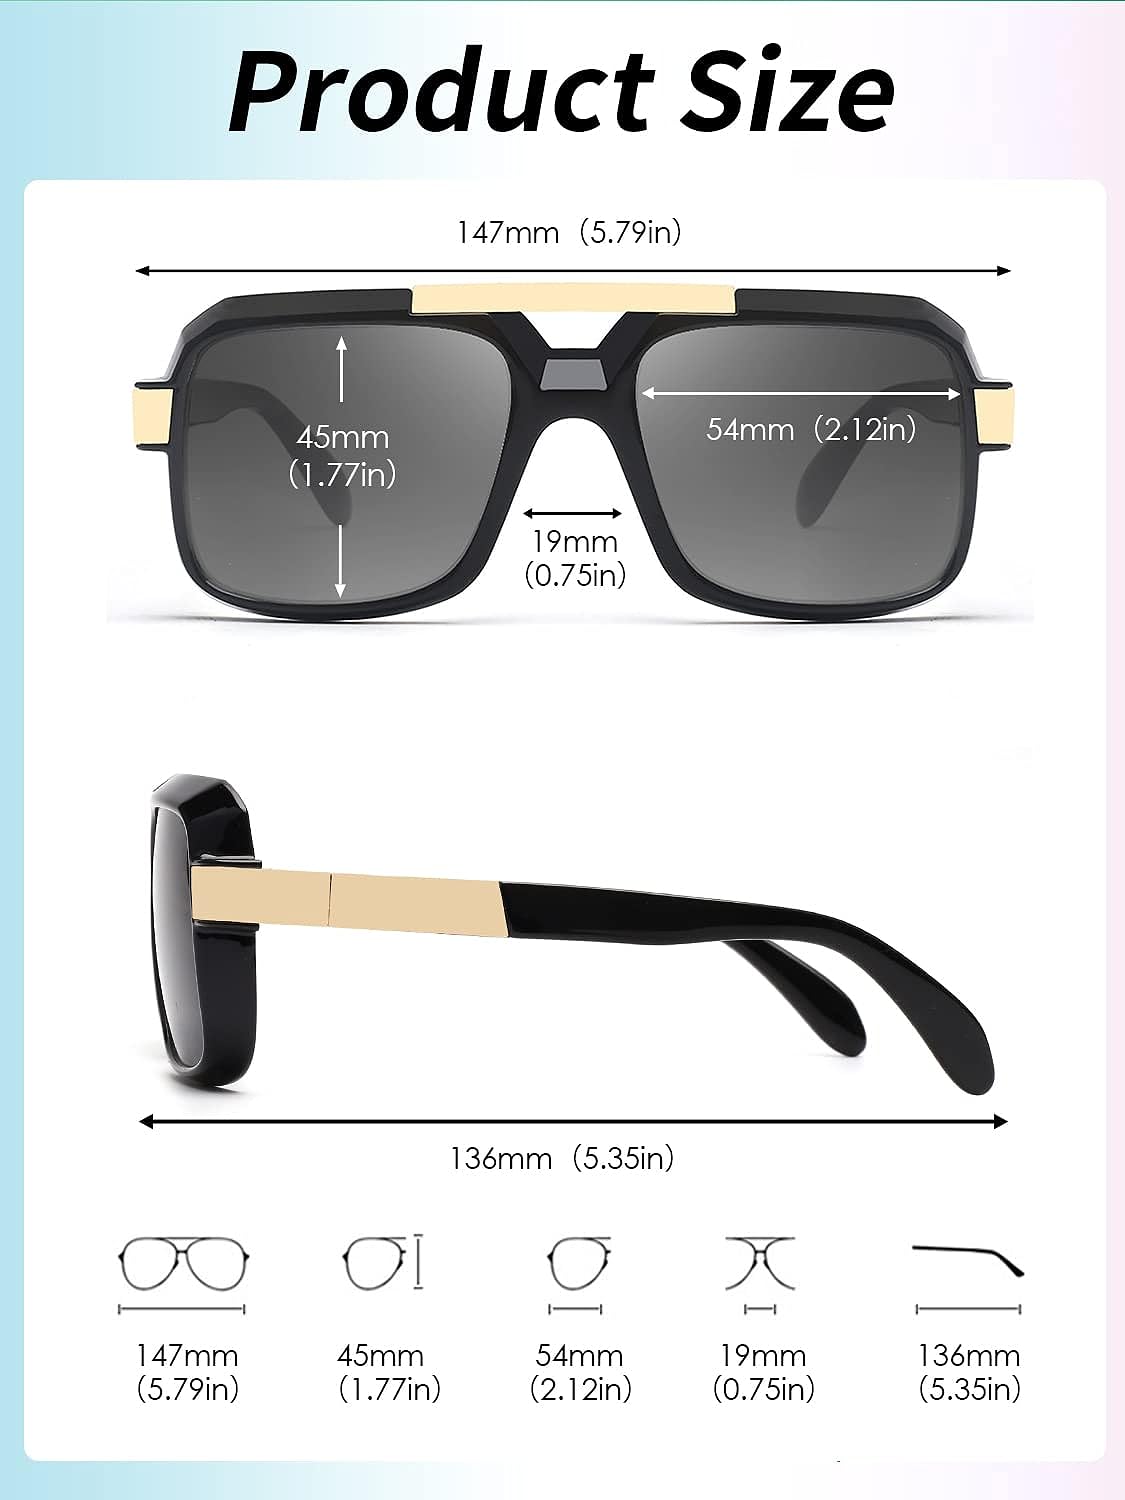 JIM HALO Oversized Polarized Aviator Sunglasses, Driving Trendy Square Flat Top Shades UV400 Shiny Black/Grey